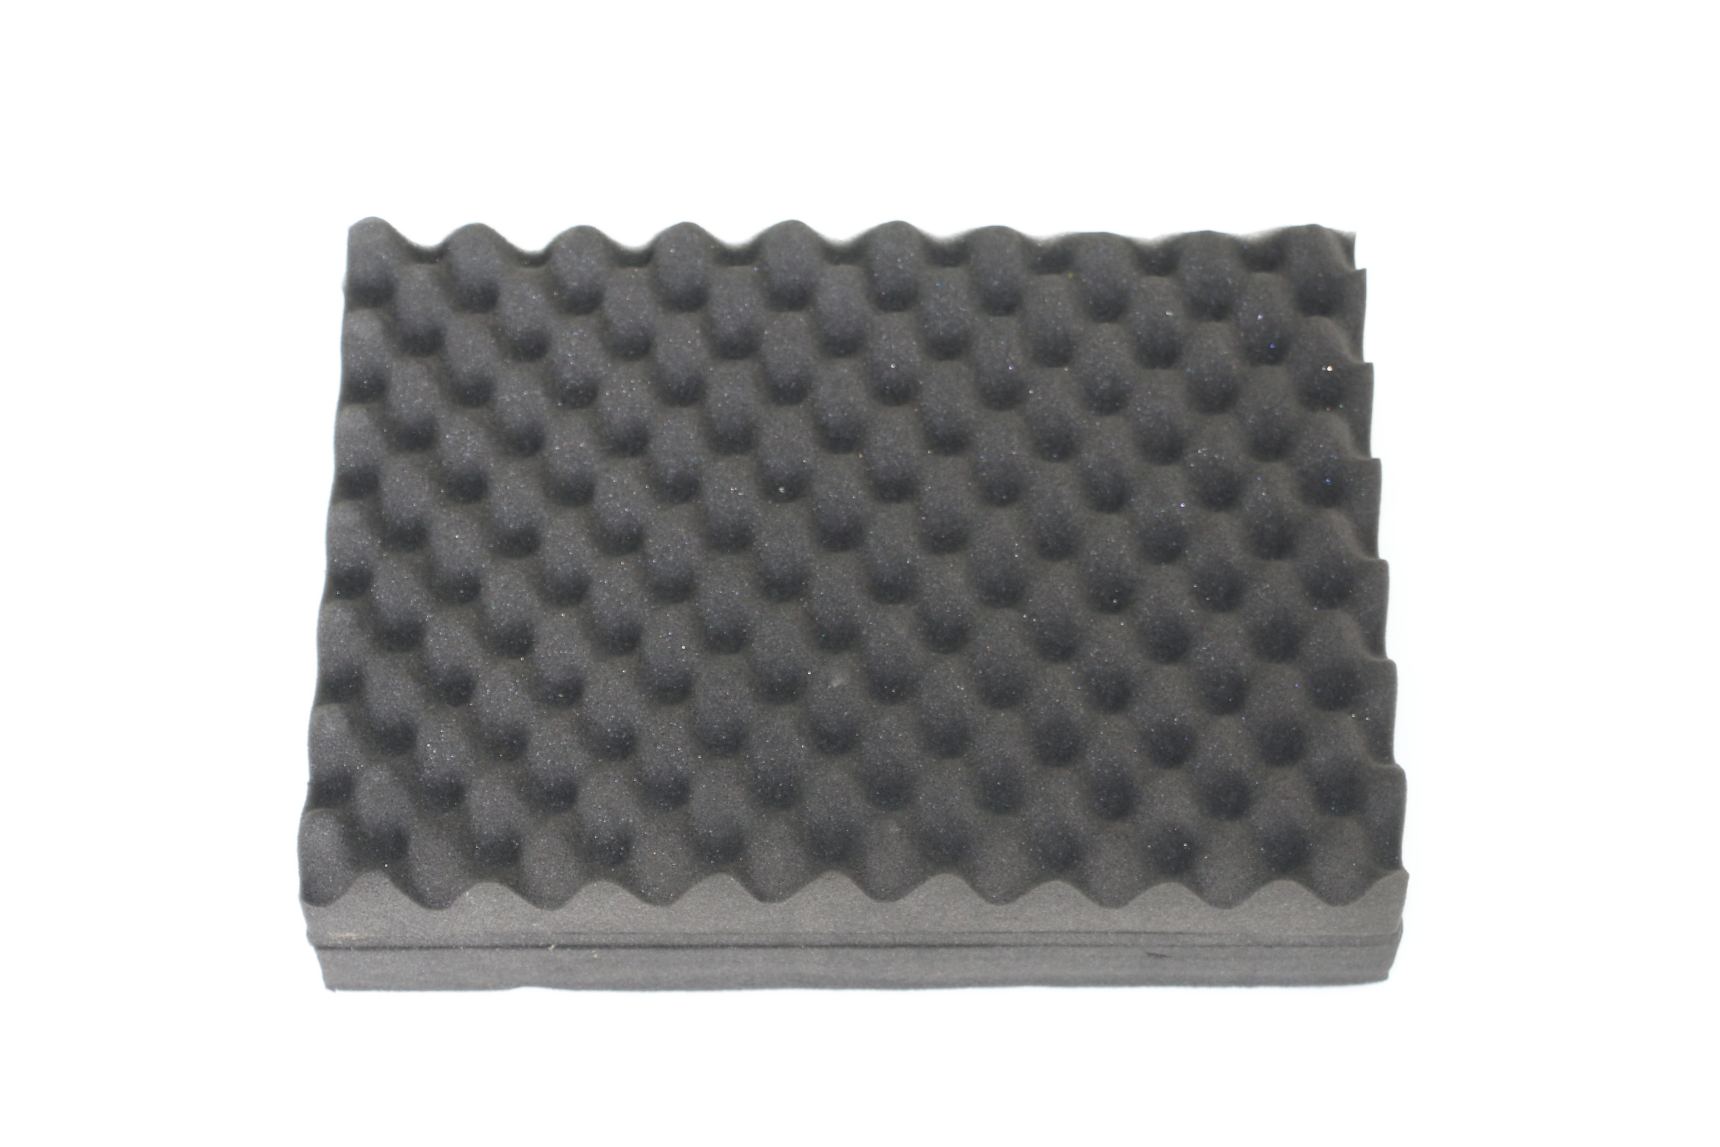 High Density Soundproofing Acoustic Wave Type Shaped Sound Reduction Sponge Acoustic Foam Hotel, KTV 12-30kg/m3 Polyurethane